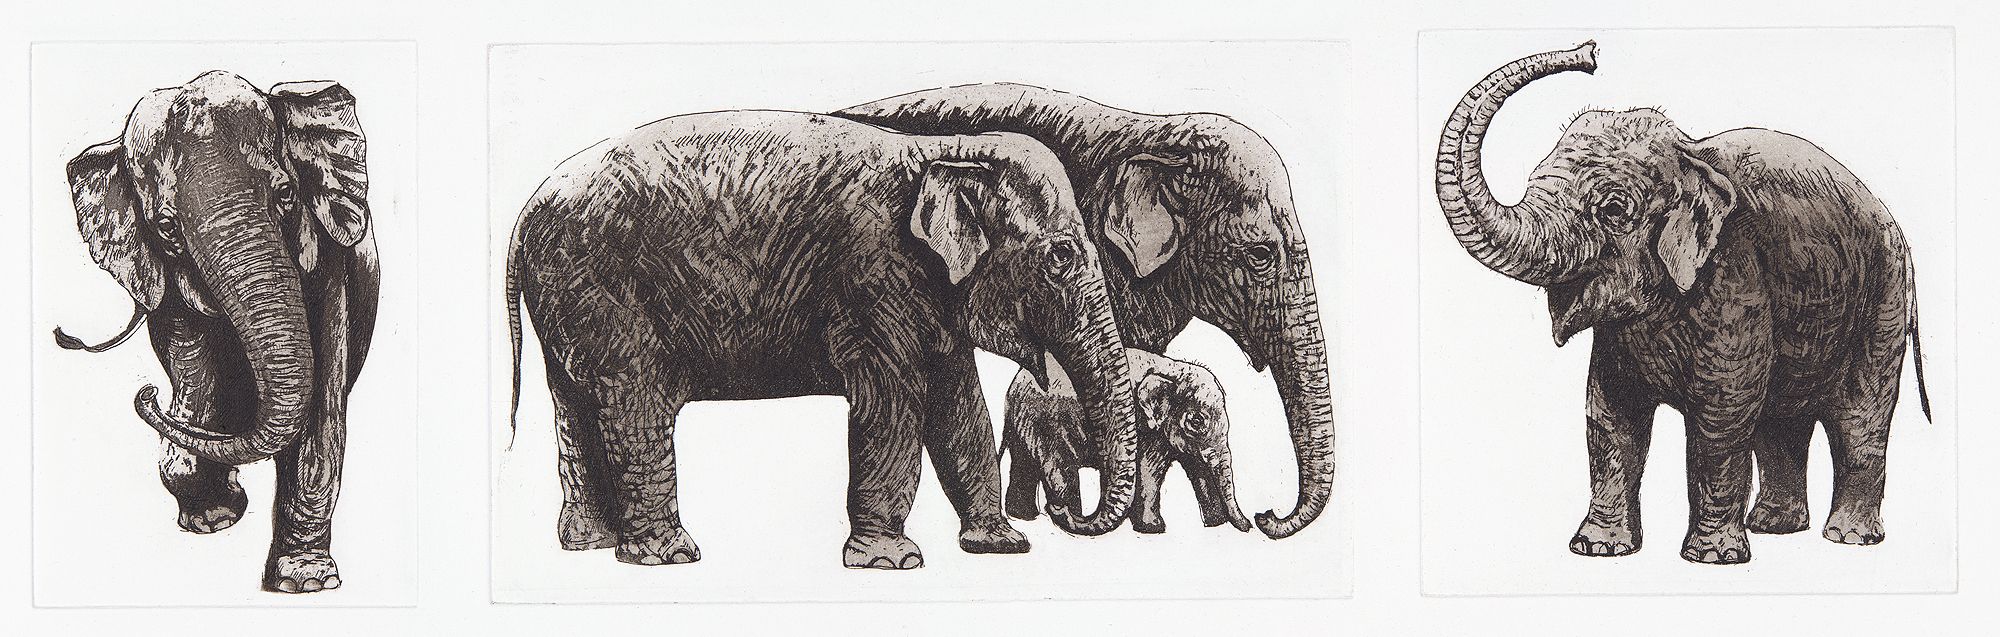 Elephant Parade by Jane Peart